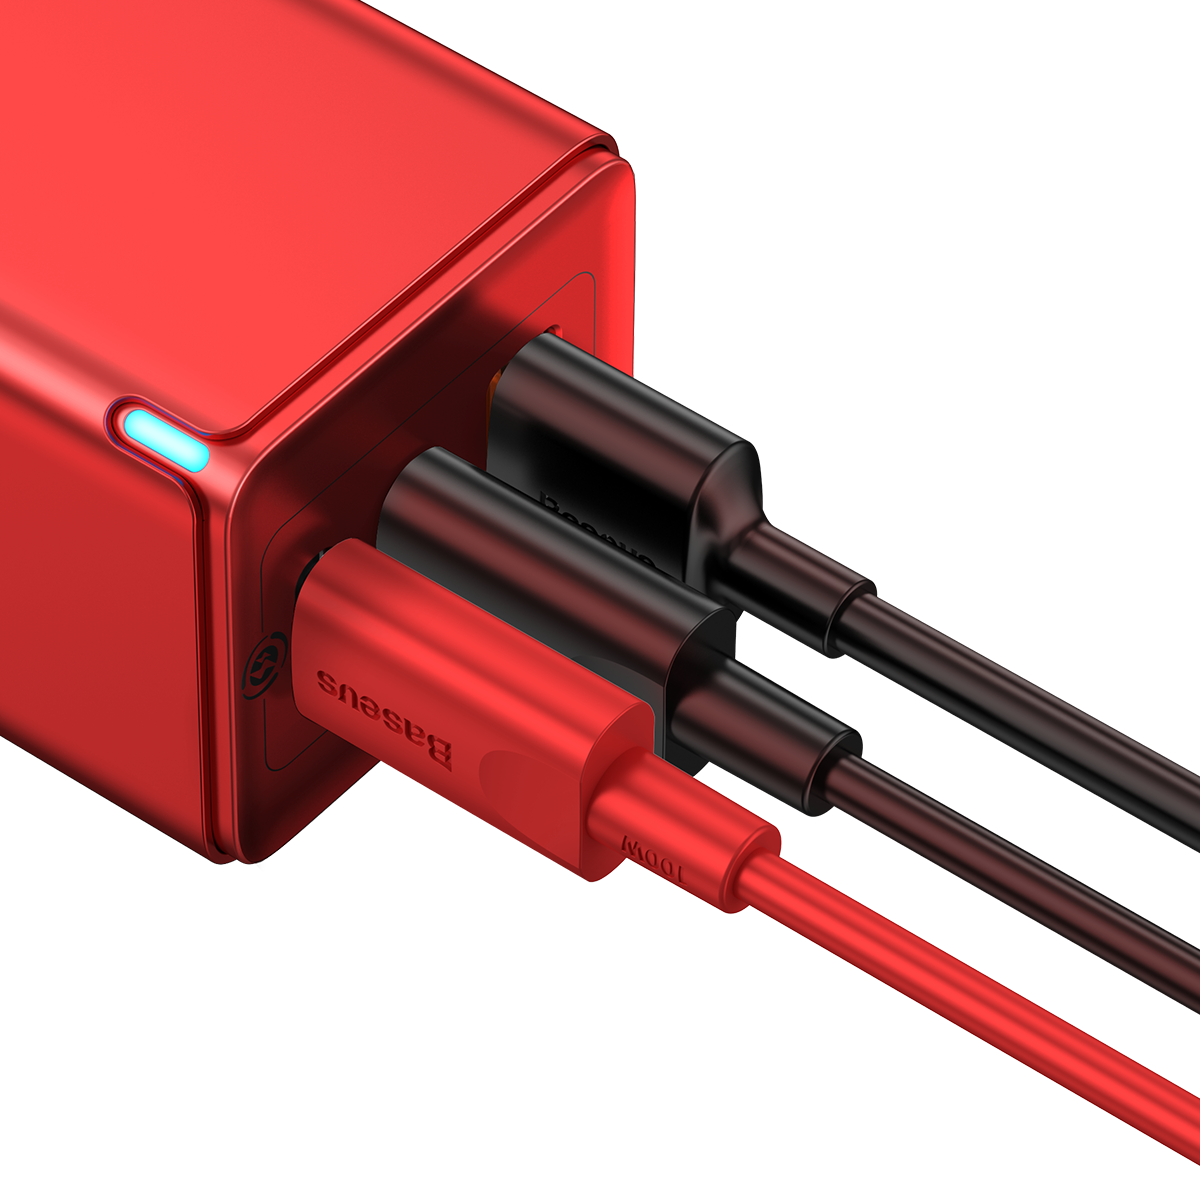 Baseus-GaN2-Pro-Gallium-Nitride-Charger-Dual-USB-C-USB-QC30-Fast-Charging-Travel-Wall-Charger-Adapte-1753901